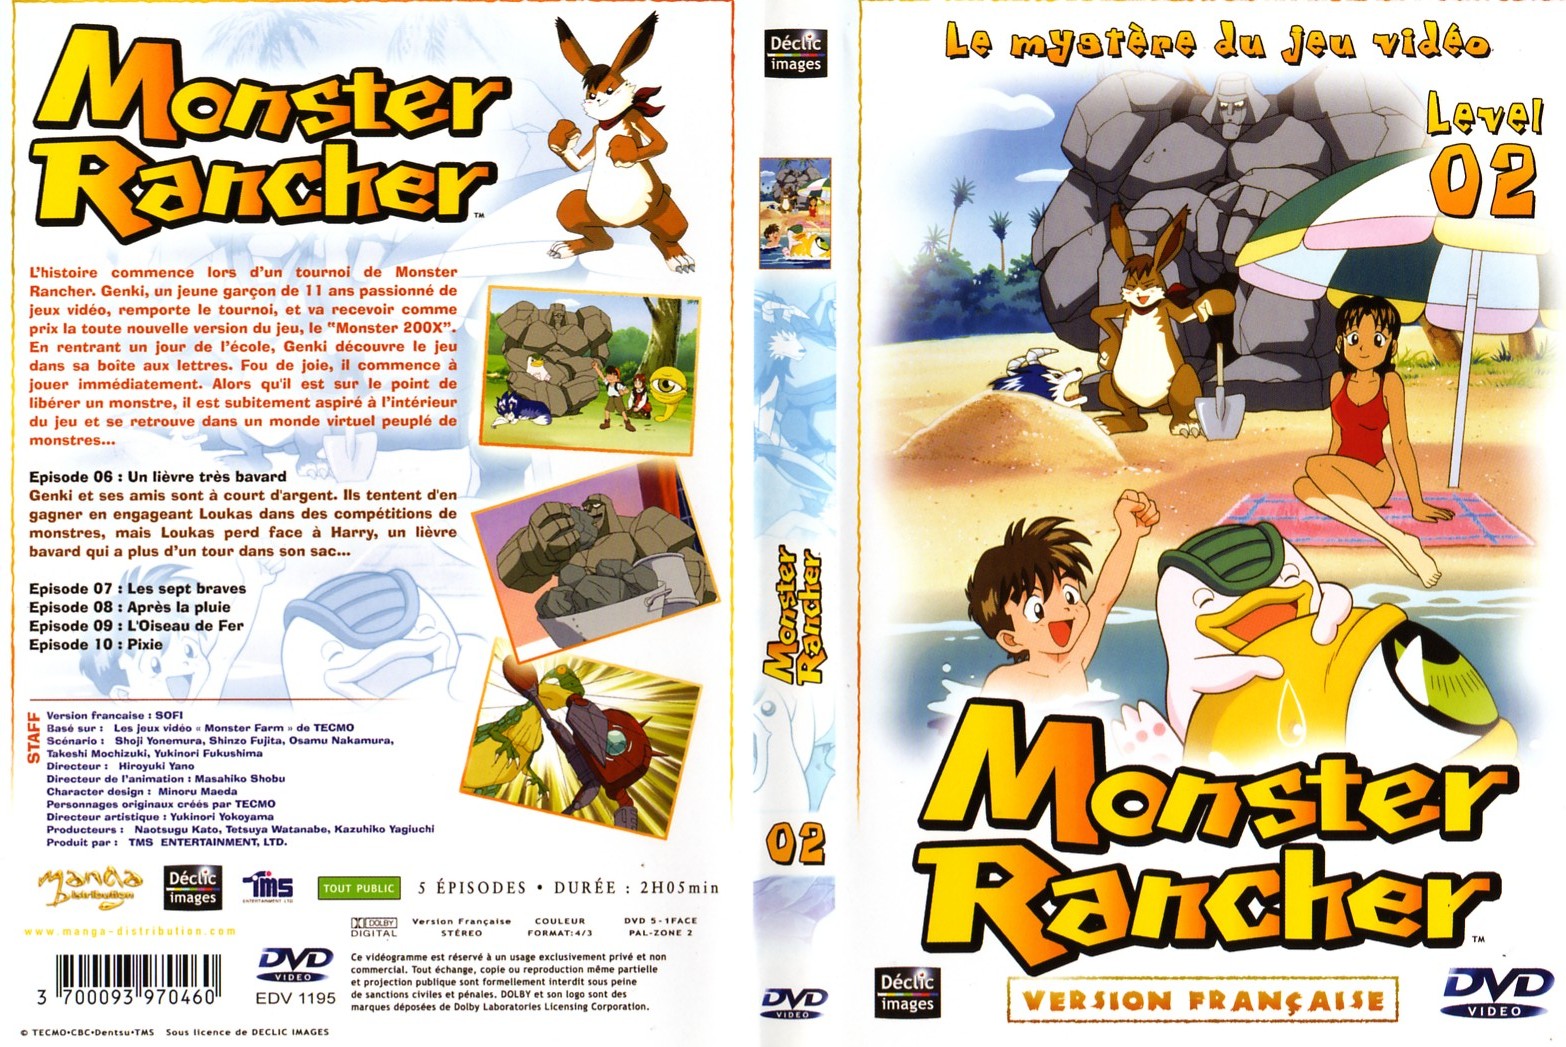 Jaquette DVD Monster rancher vol 2